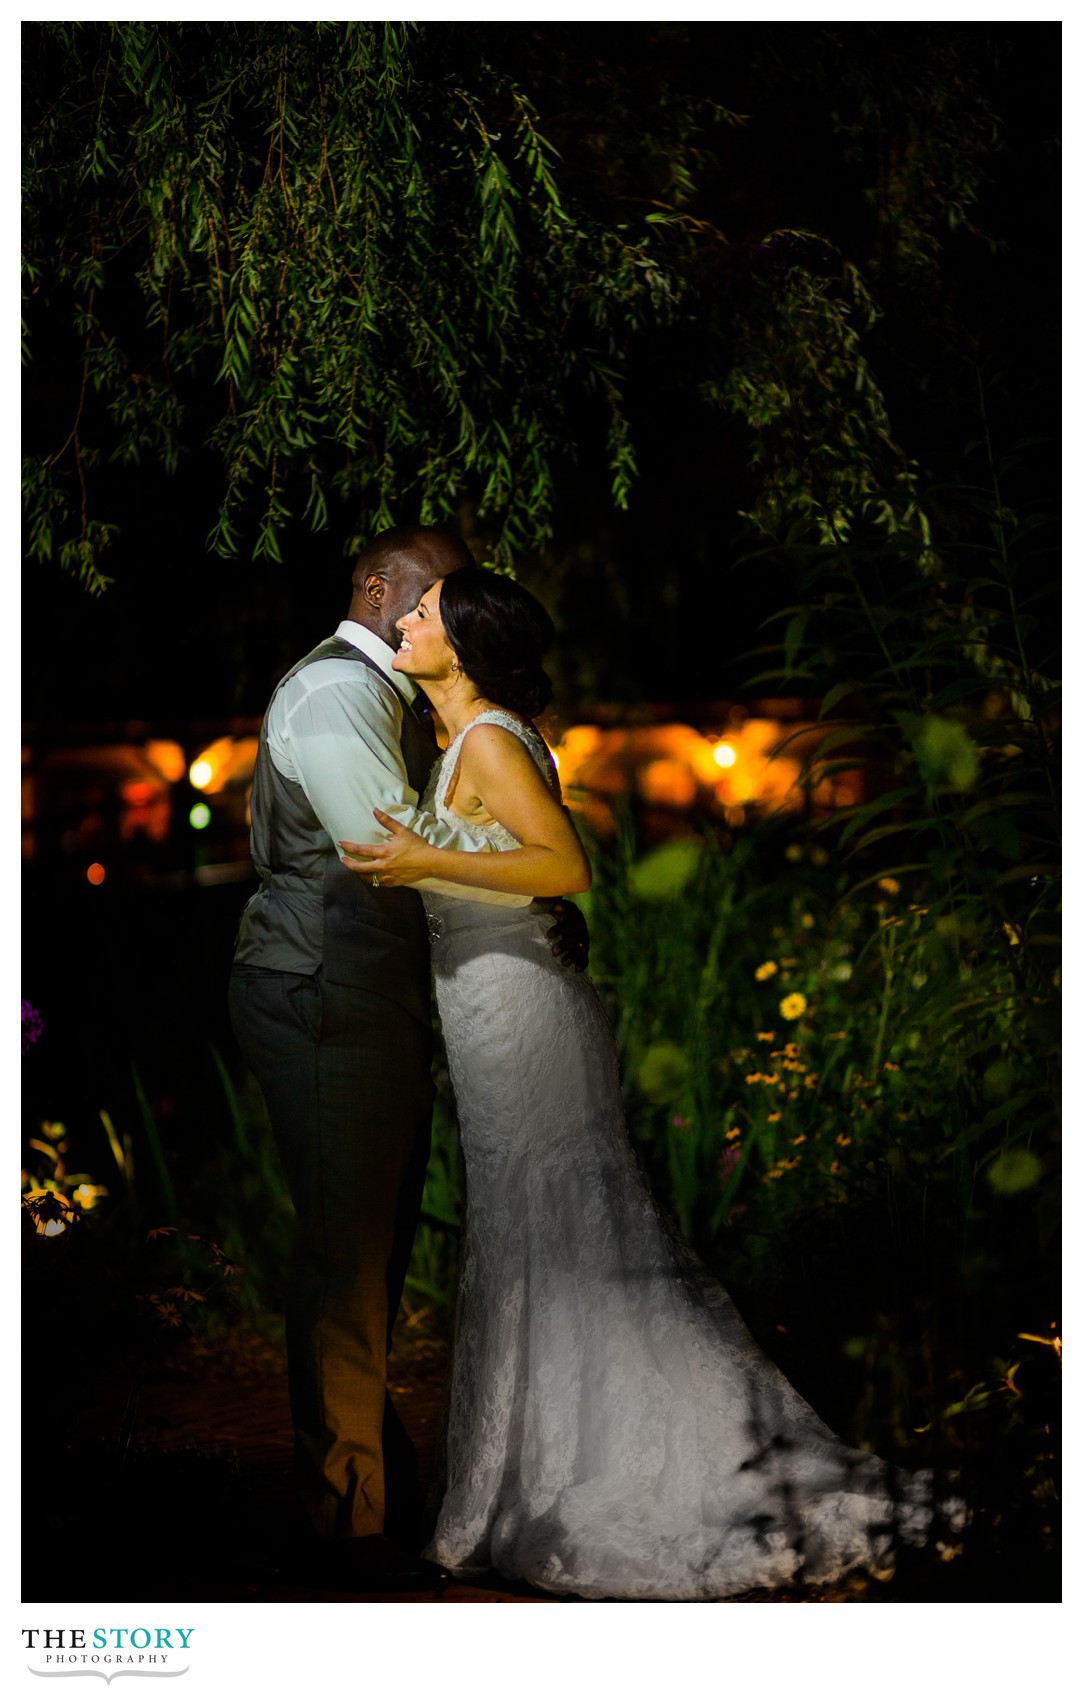 night wedding photo at mirbeau garden